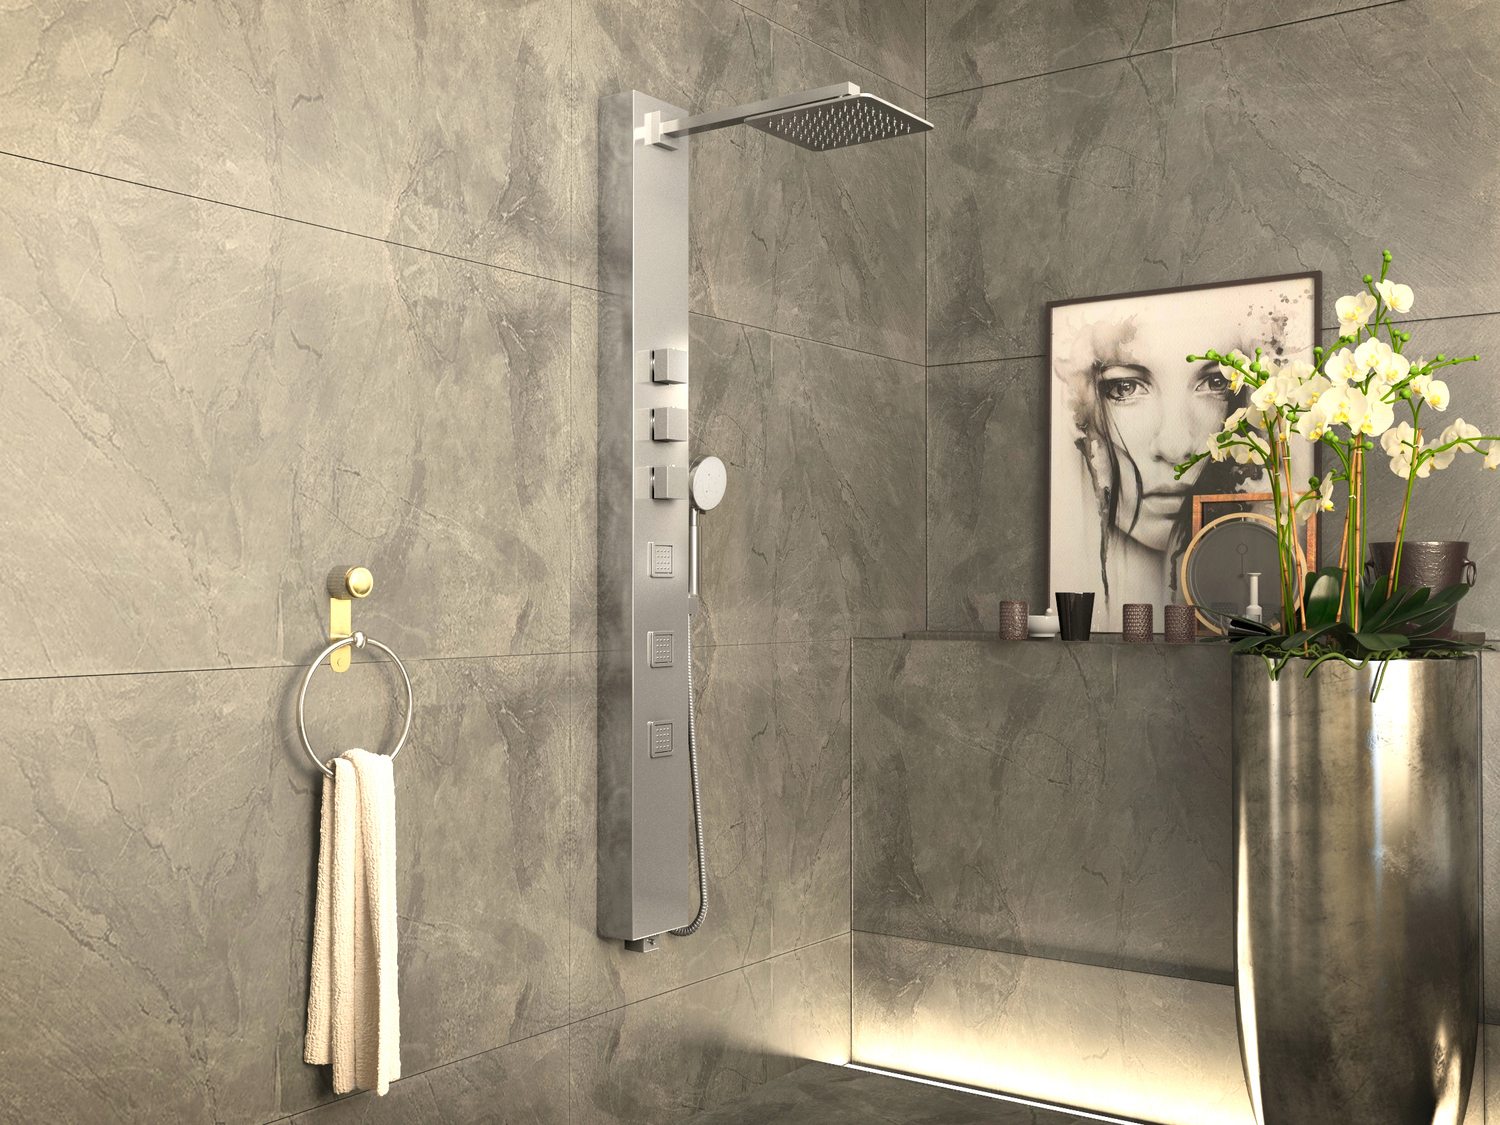 shower enclosure fixing kit Anzzi SHOWER - Shower Panels Chrome